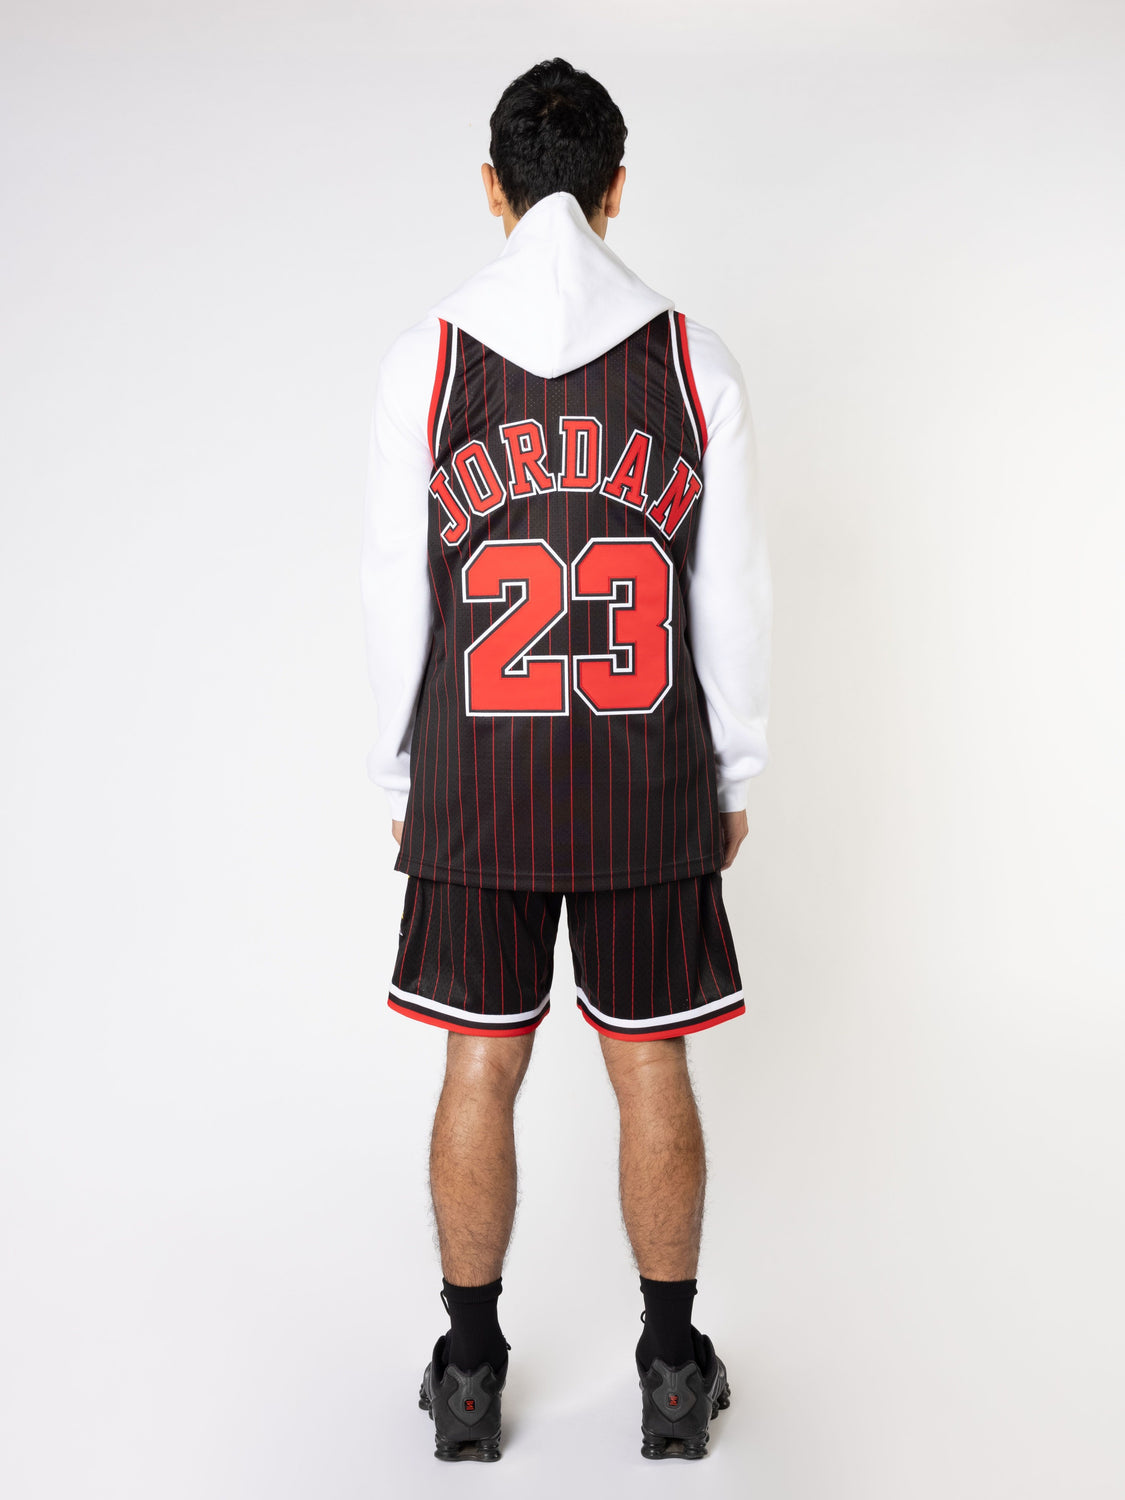 Men's Chicago Bulls Michael Jordan #23 Black jersey - MVP Special Edition